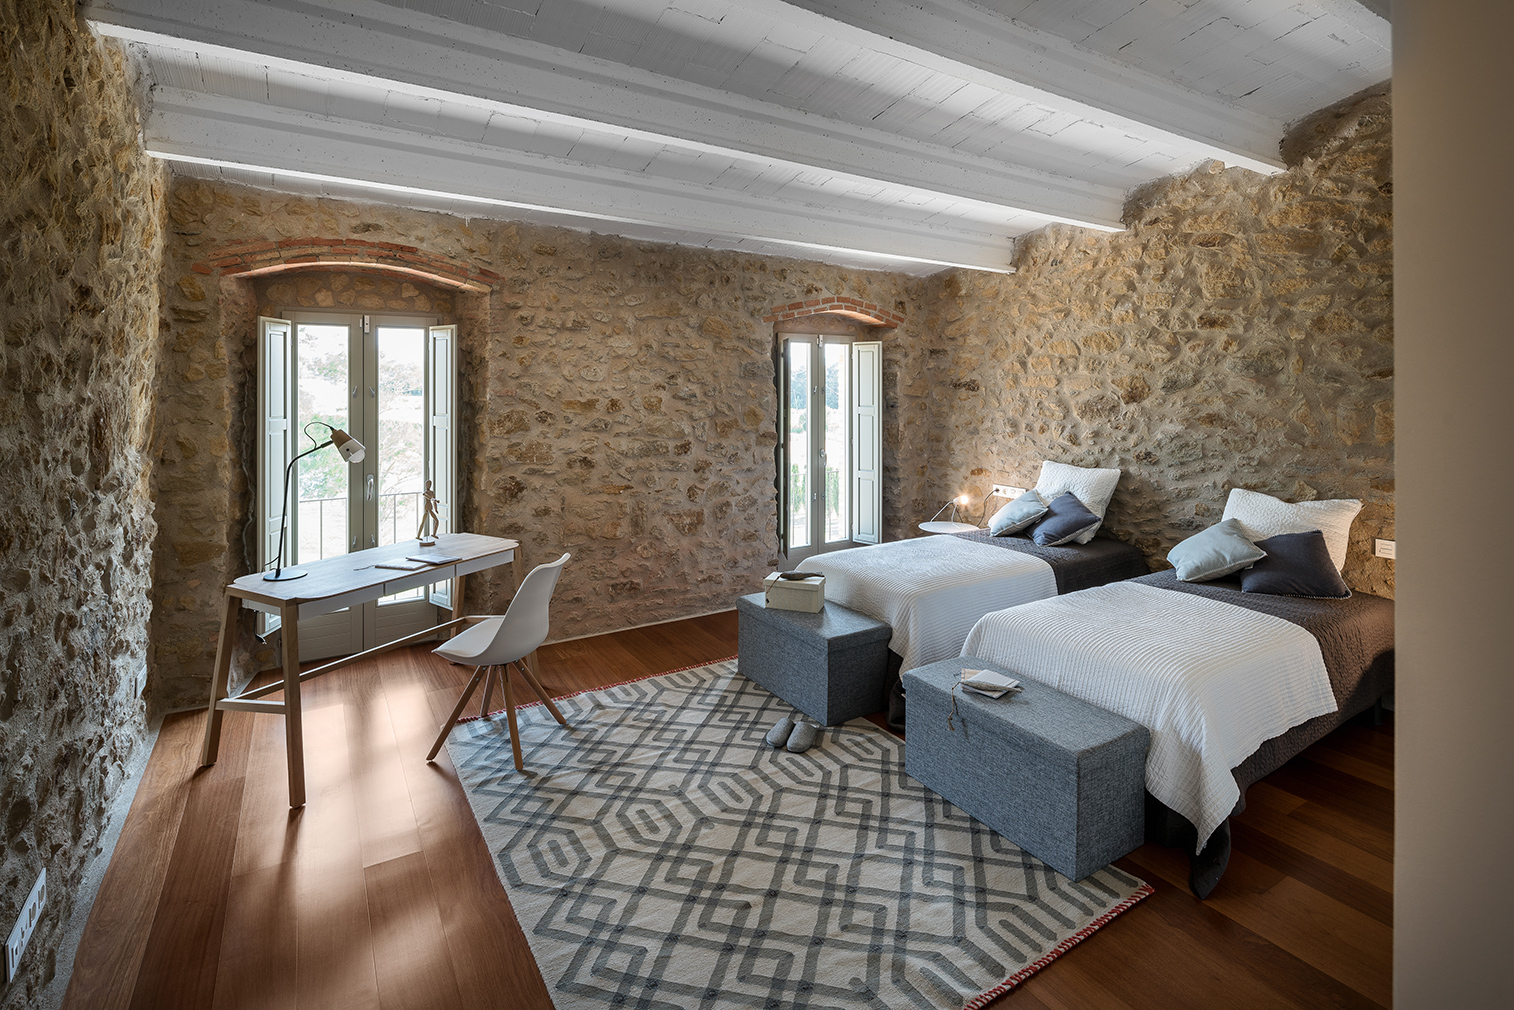 Property of the week: a restored masia in Girona’s Baix Empordà